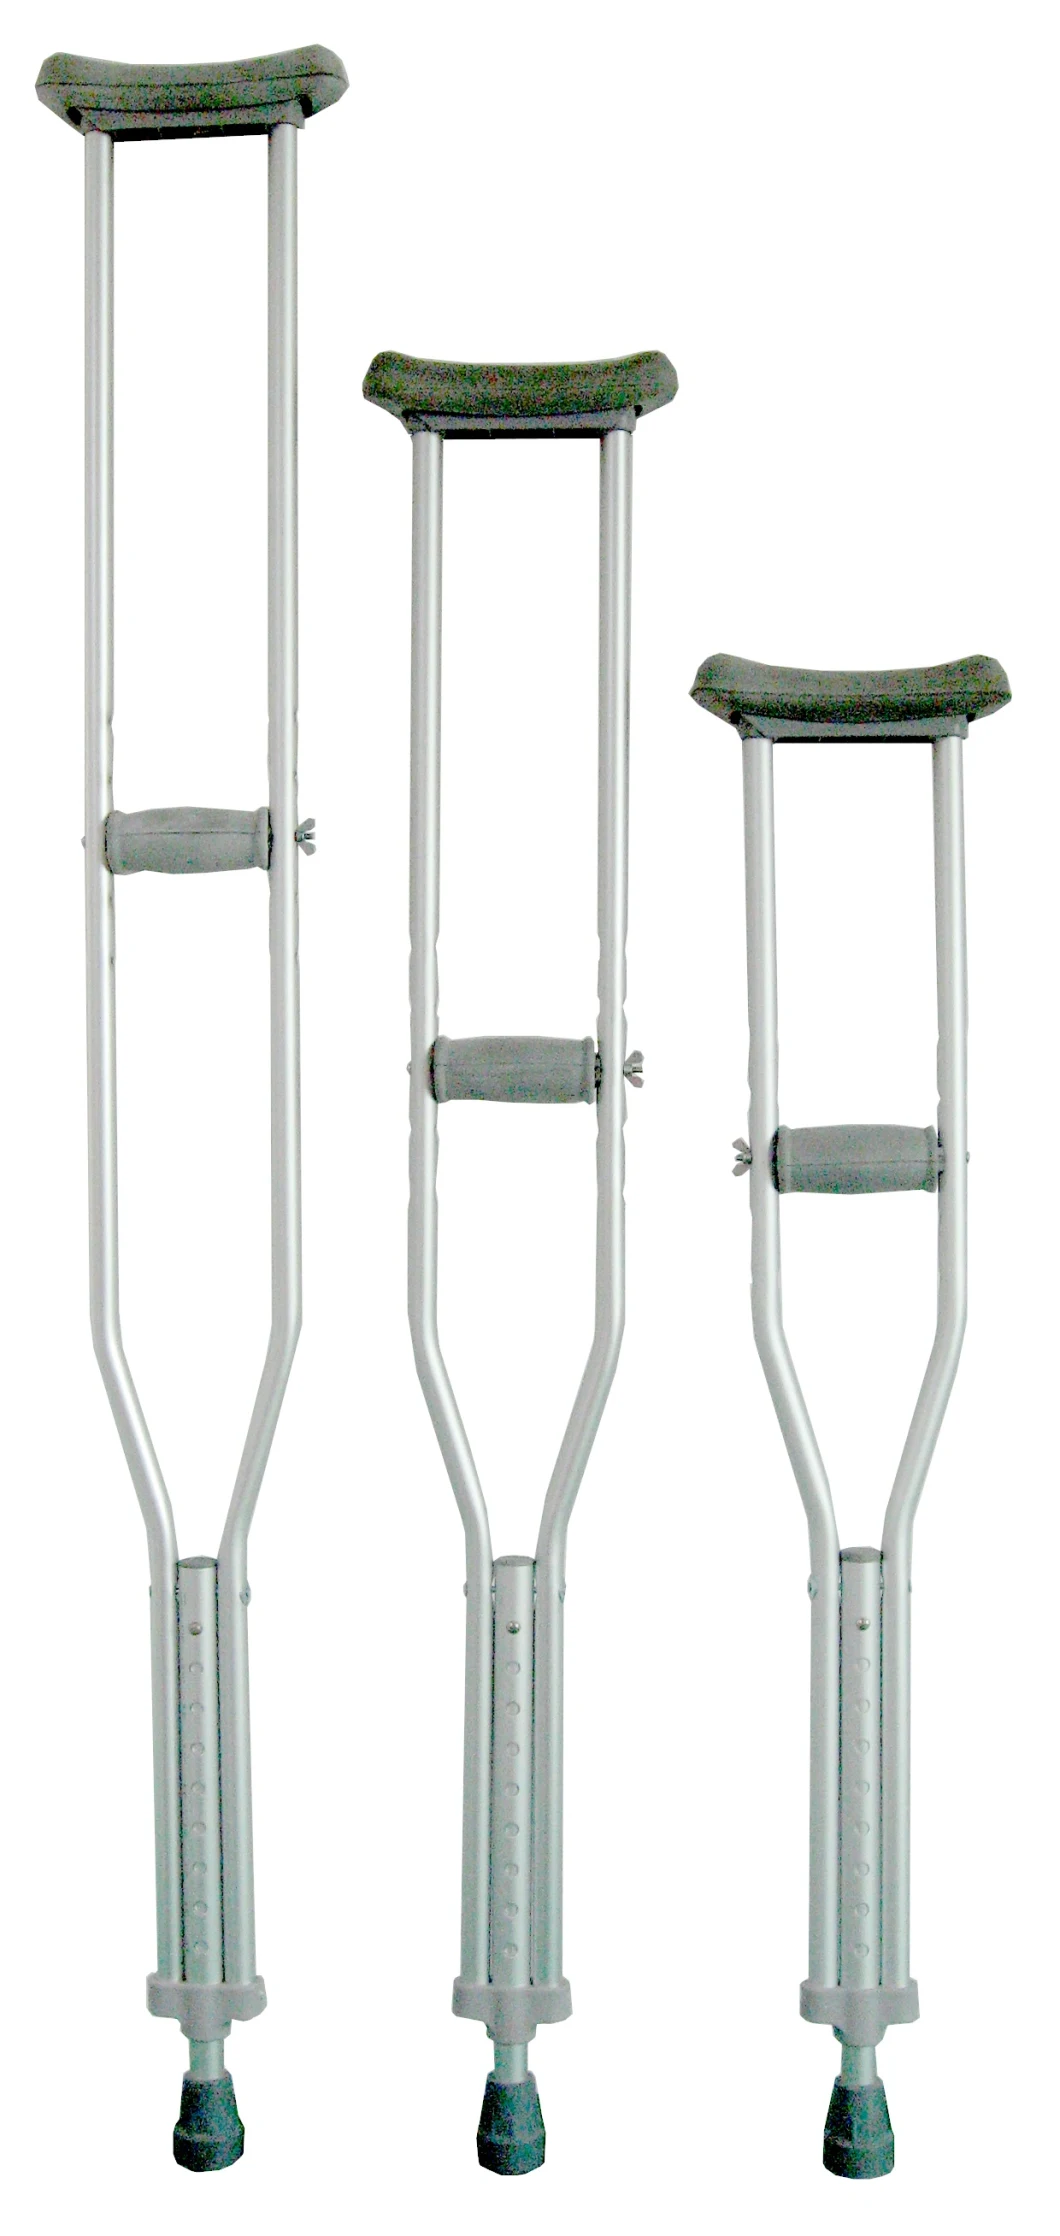 Arm Walking Cane Lightweight Aluminum Underarm Elbow Crutches Adjustable Elbow Crutch Medical Lightweight Aluminium Adjust